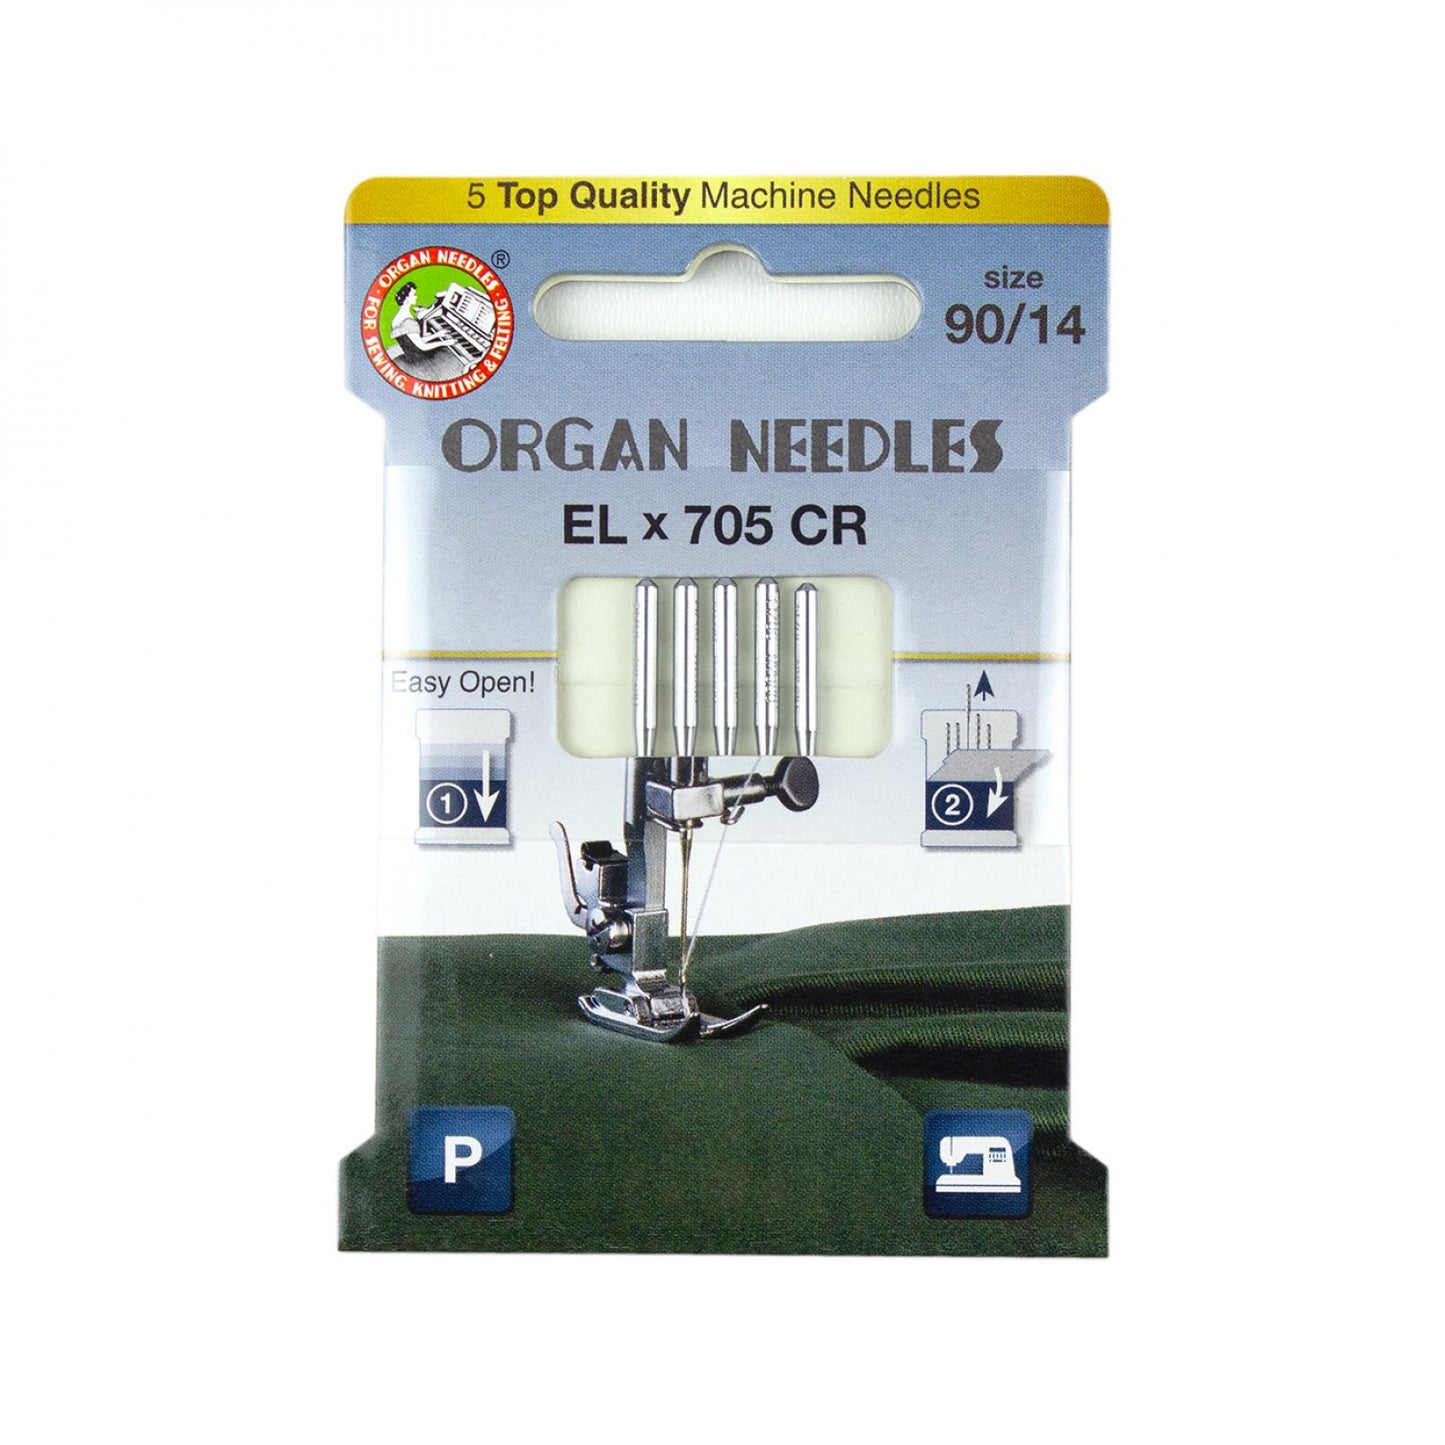 ORGAN Brand ELx705 Chromium Size 90/14 - Serger Needles - 5 Pack